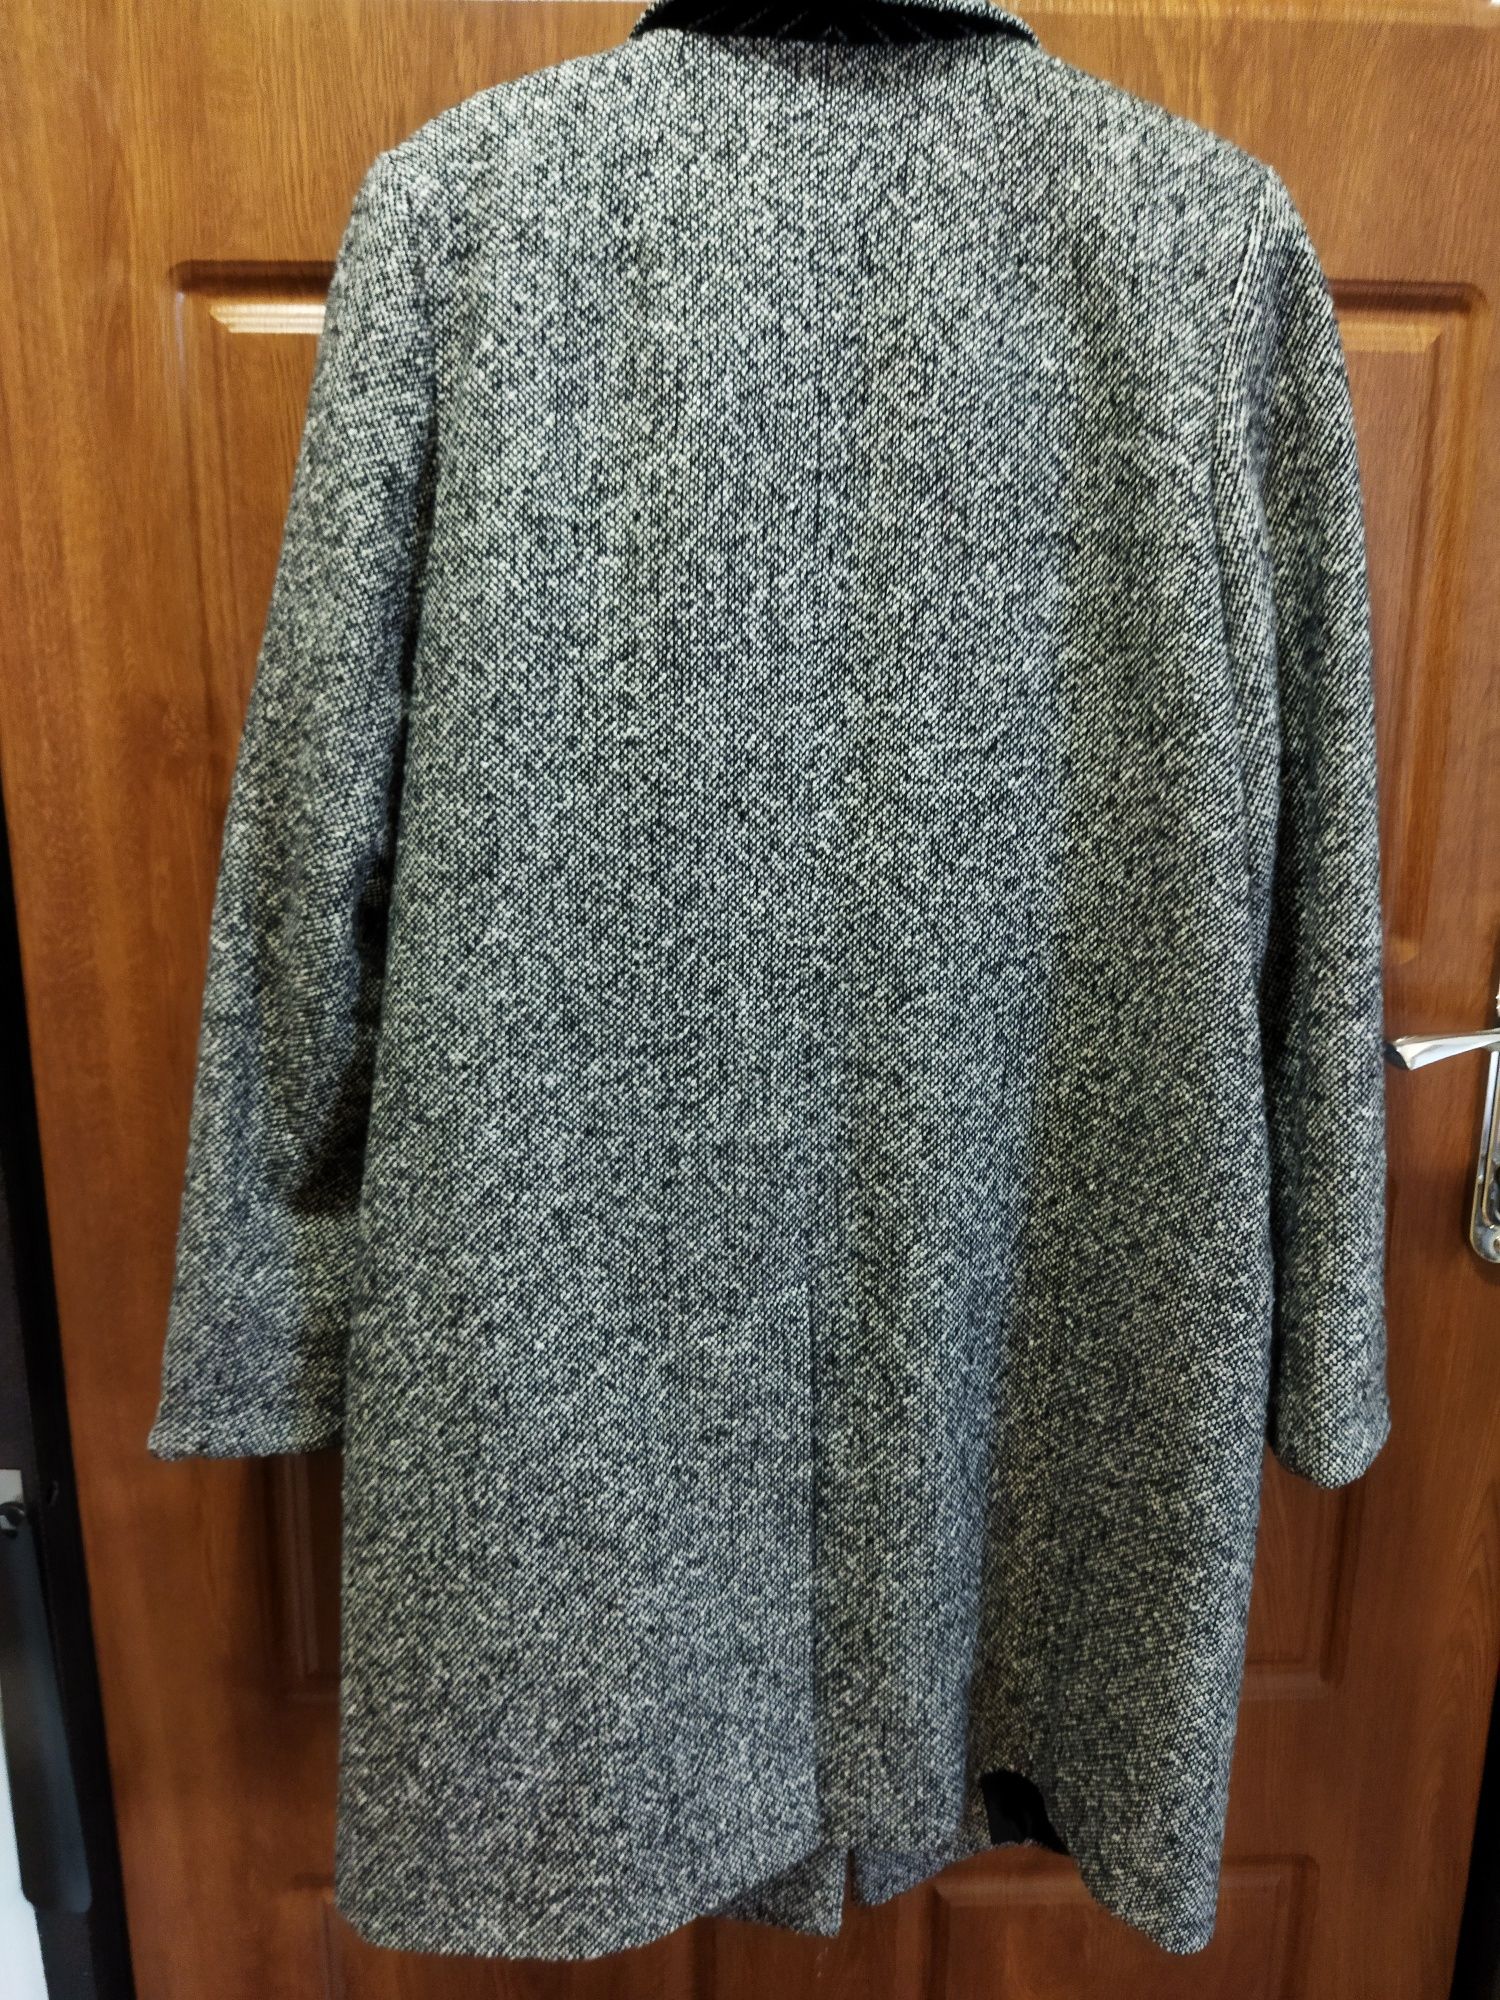 Пальто жіноче нове, сіре, розмір 48-50